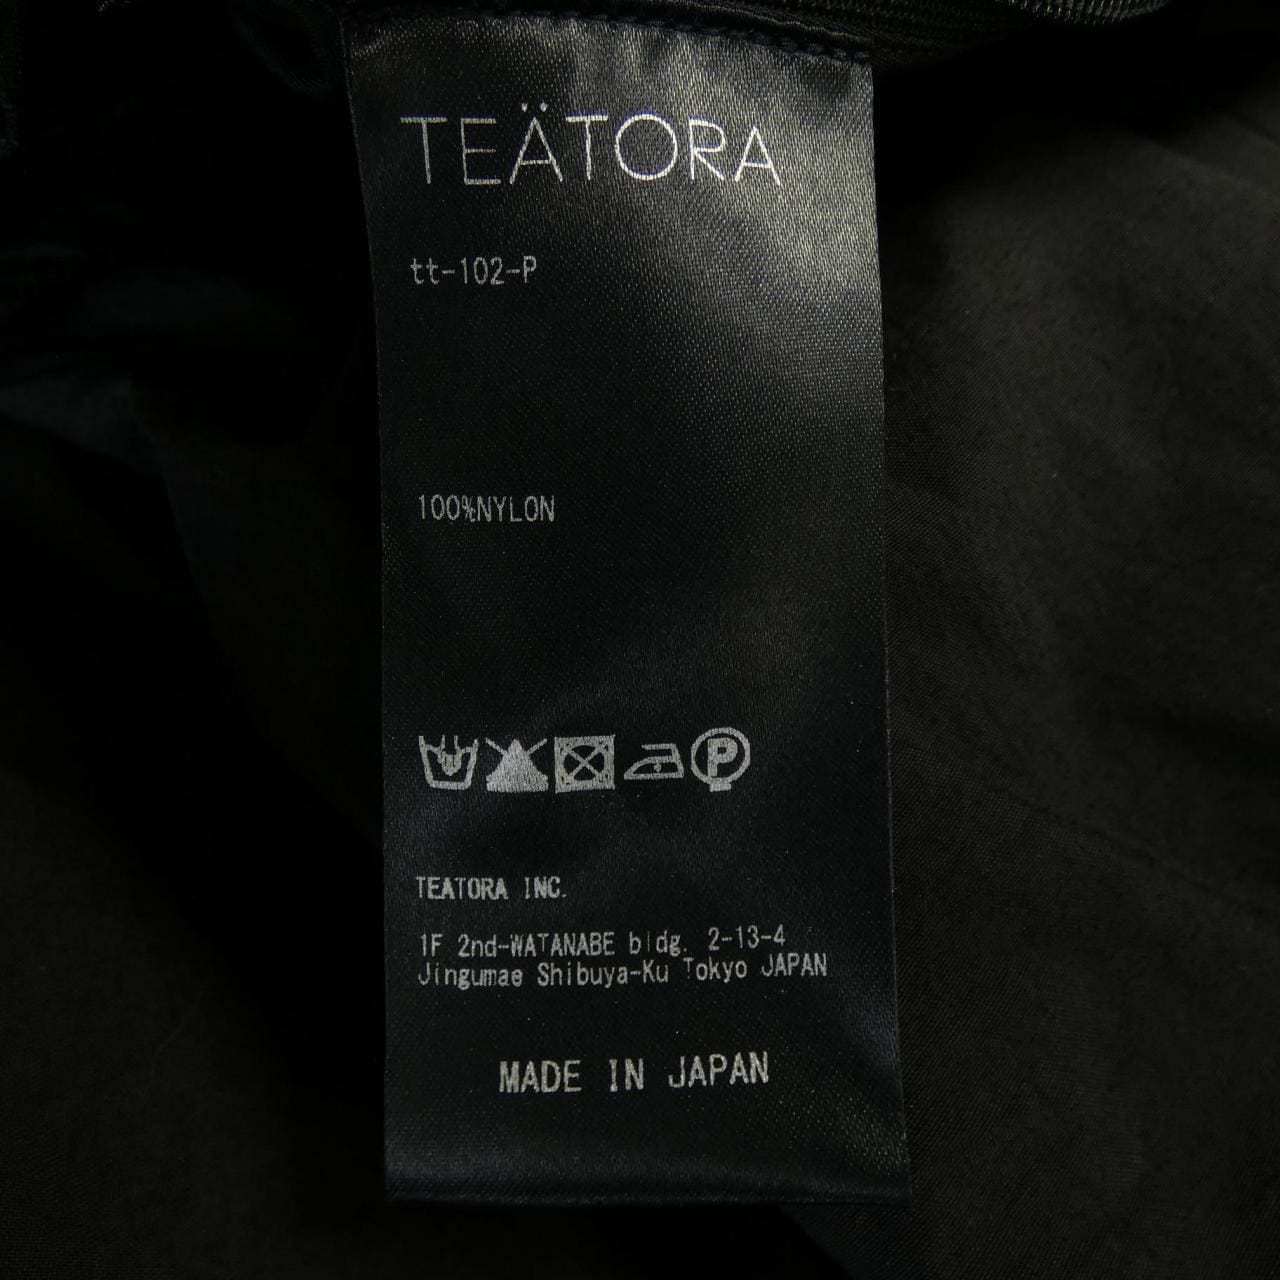 Teatra TEATORA coat